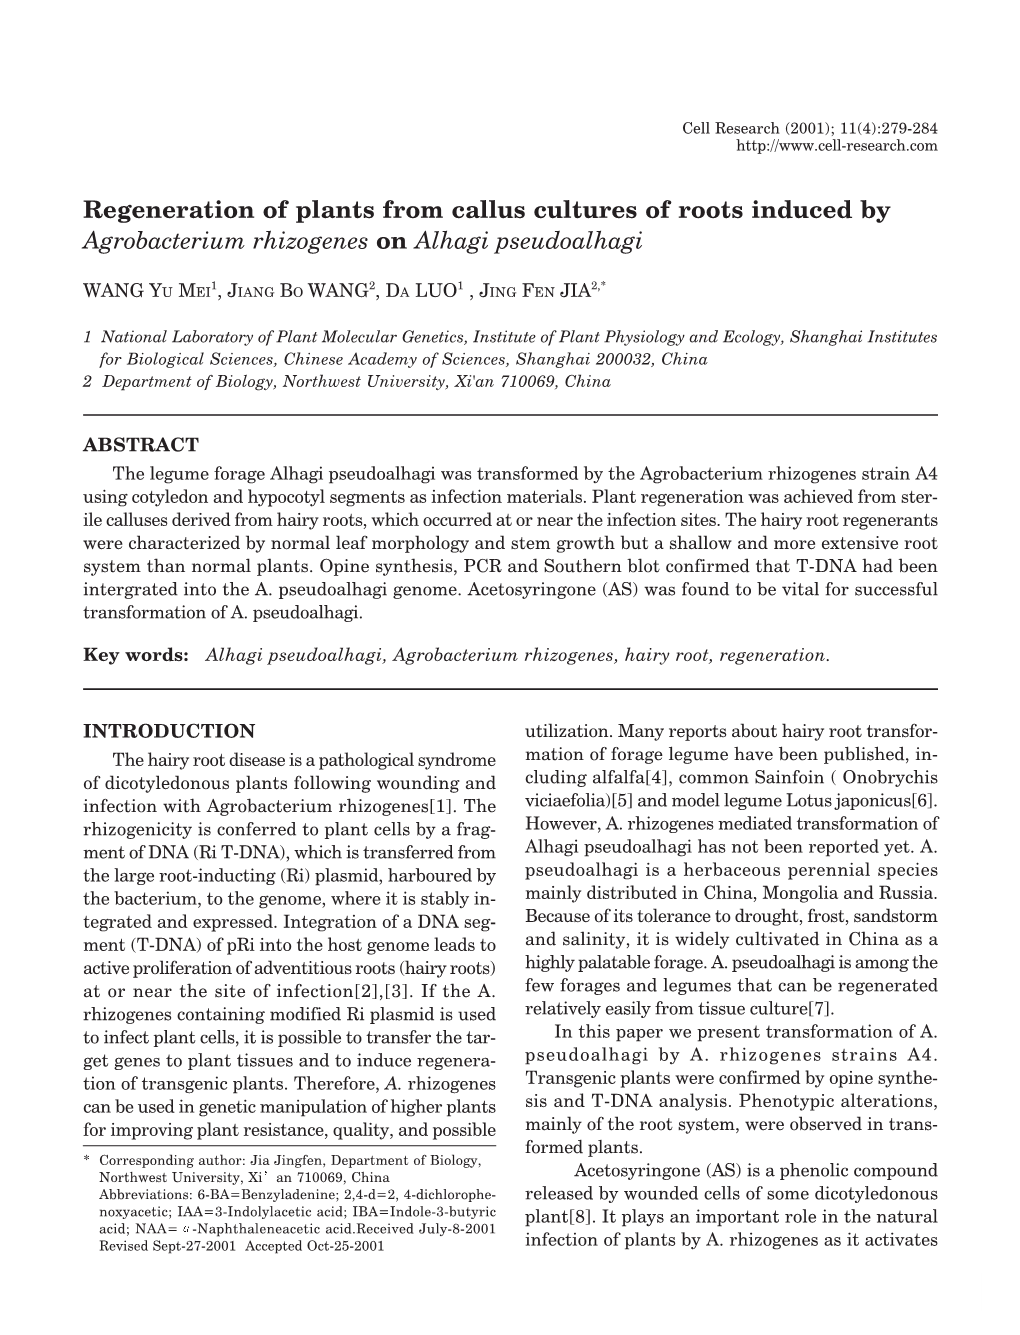 Regeneration of Plants from Callus Cultures of Roots Induced by Agrobacterium Rhizogenes on Alhagi Pseudoalhagi